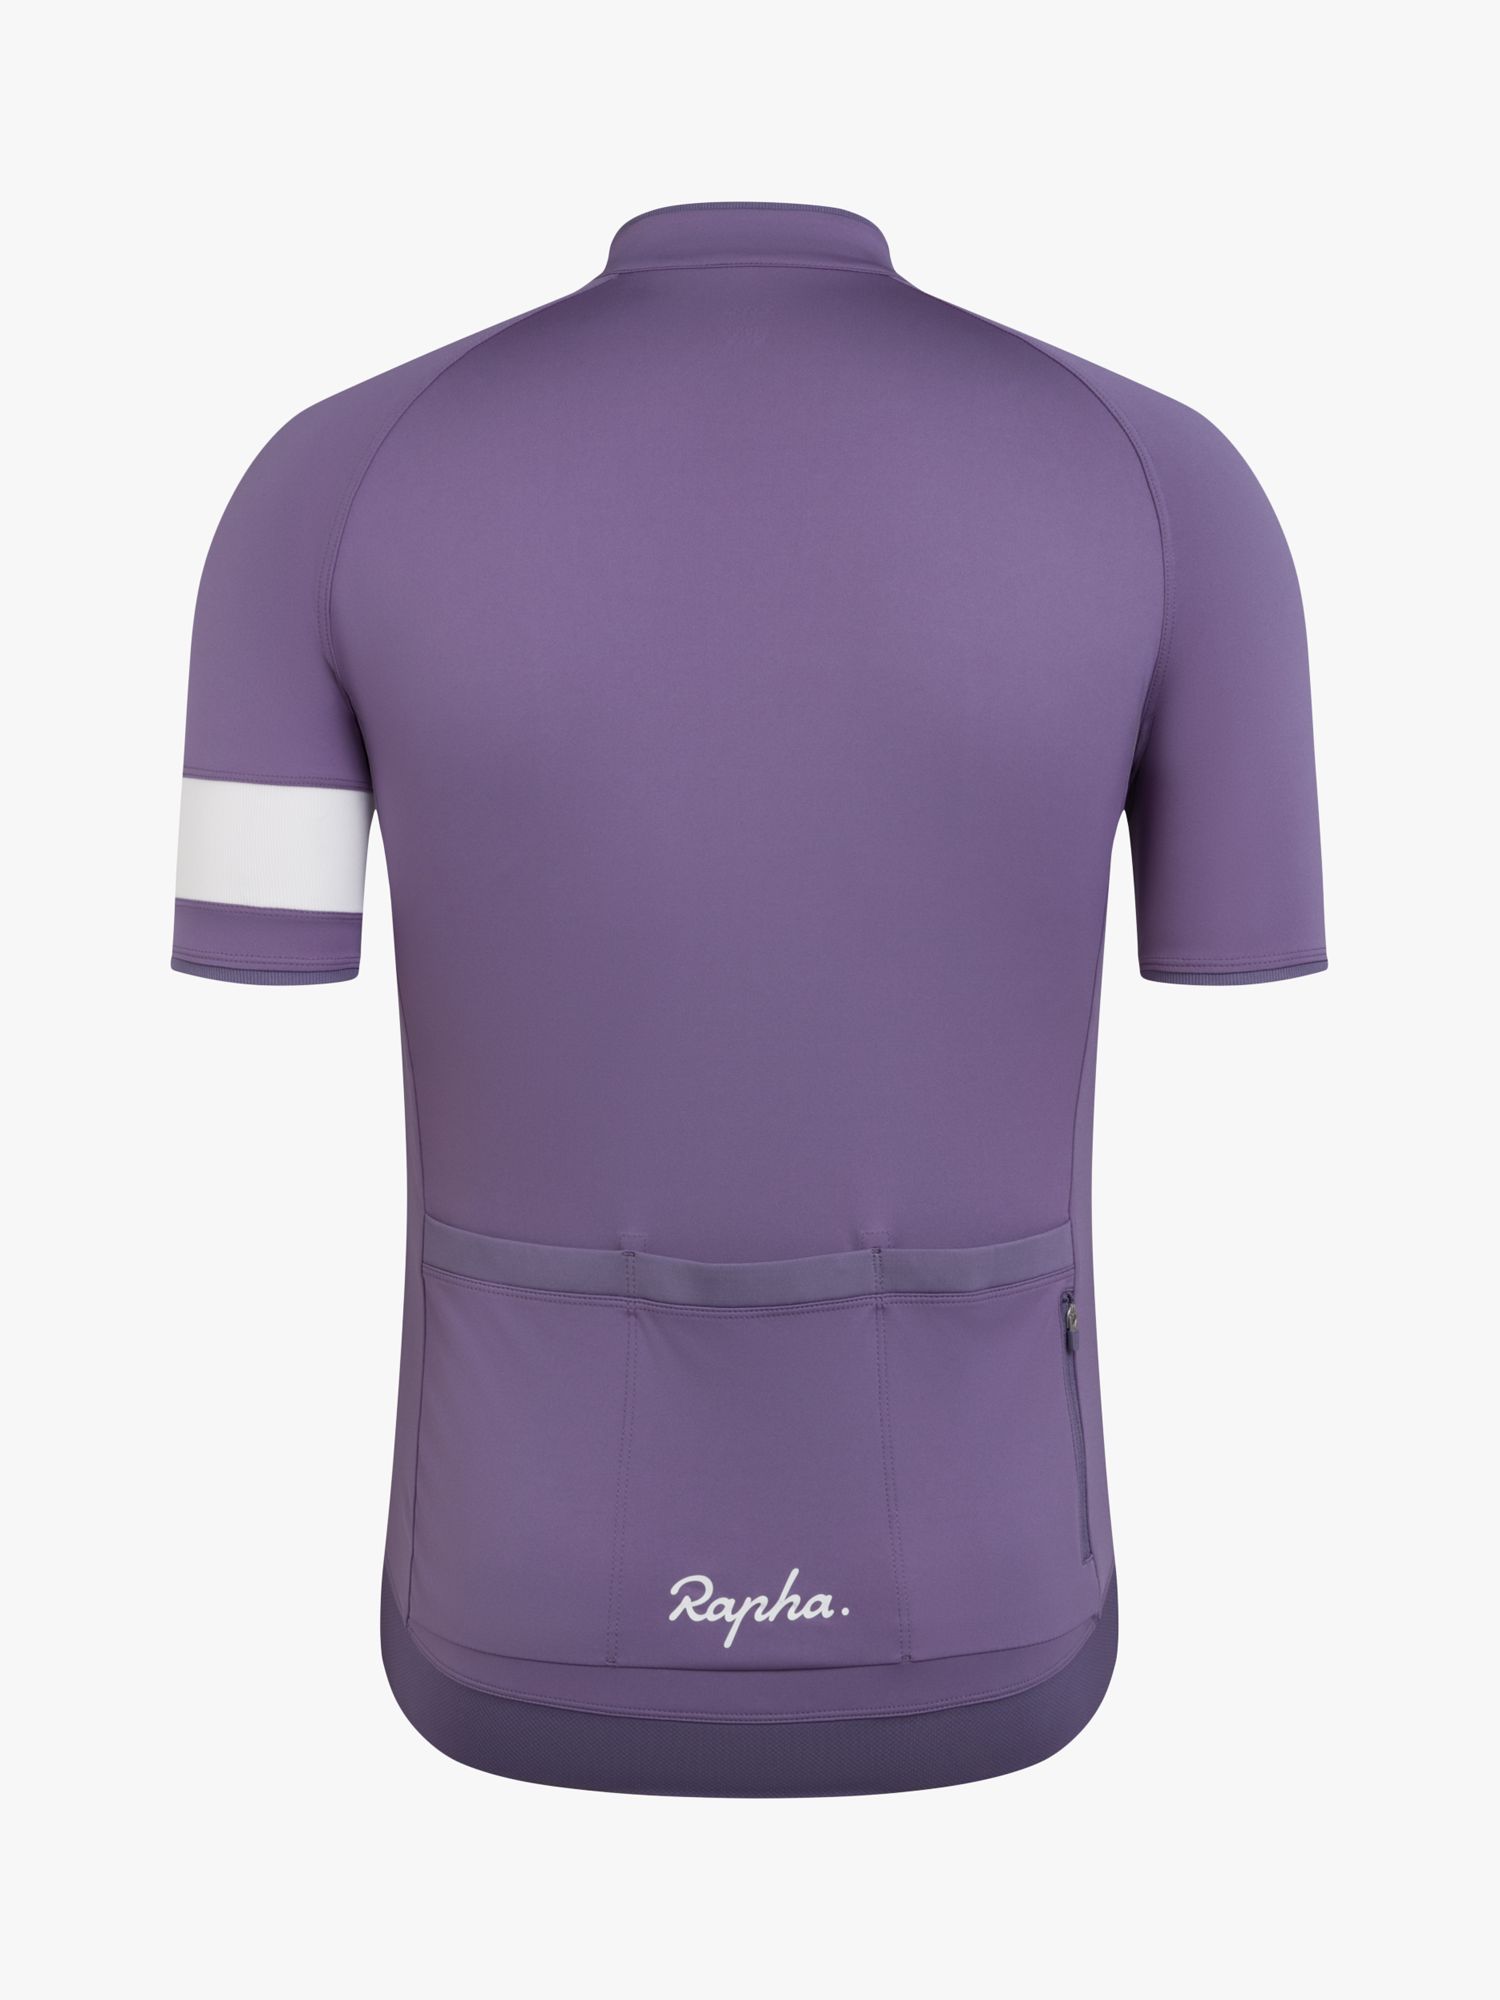 Rapha Zip Through Short Sleeve Jersey Top, Lilac, L